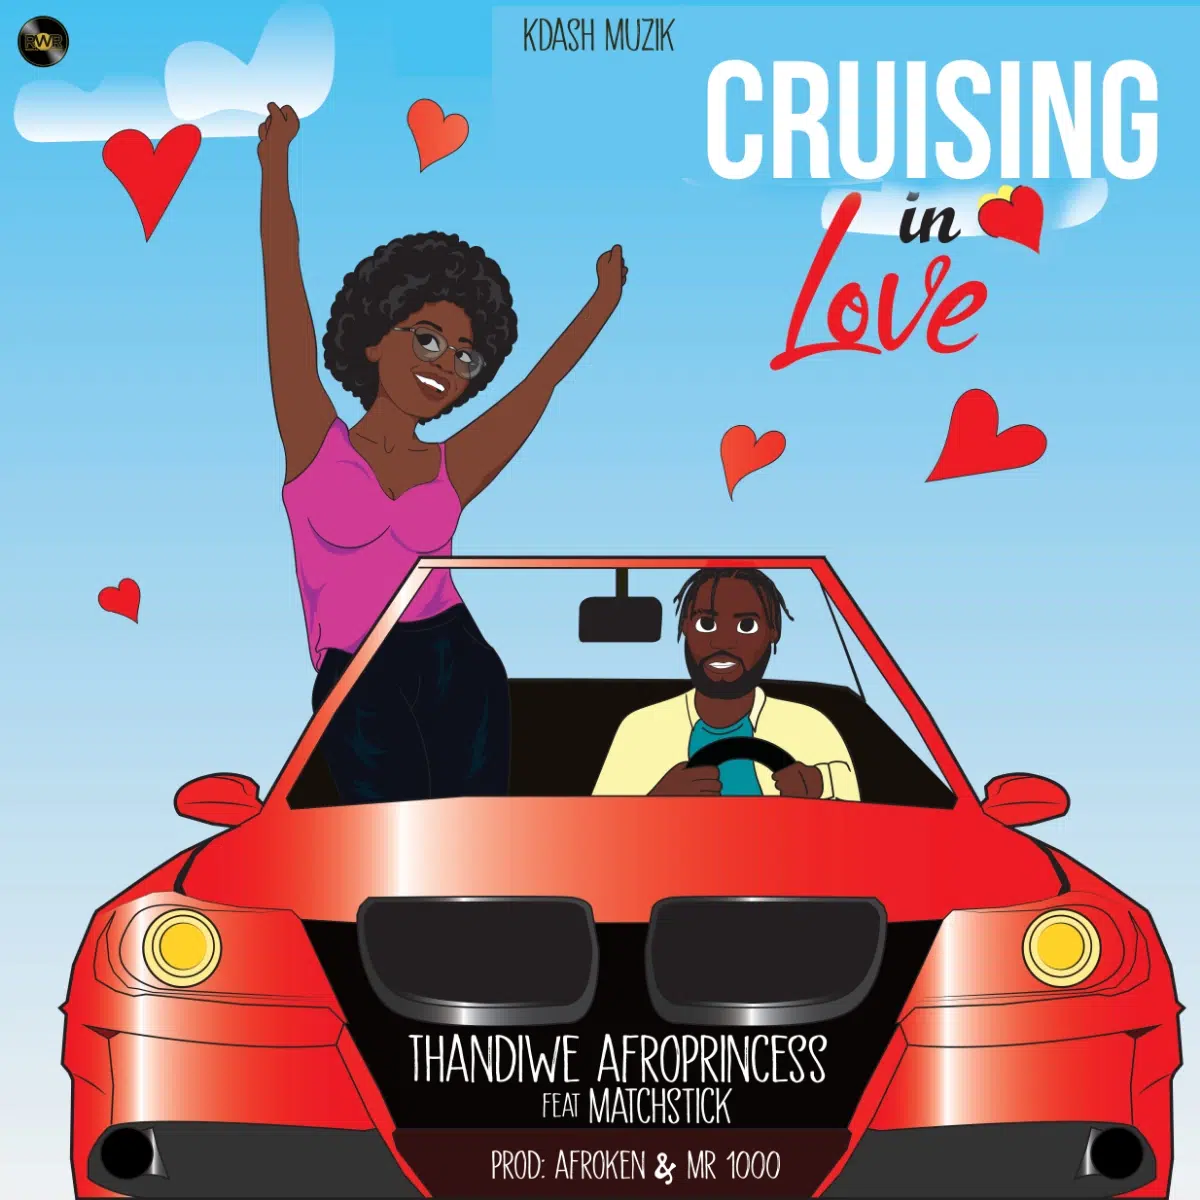 DOWNLOAD: Thandiwe Afroprincess Ft. Matchstick – “Cruising In Love” Mp3